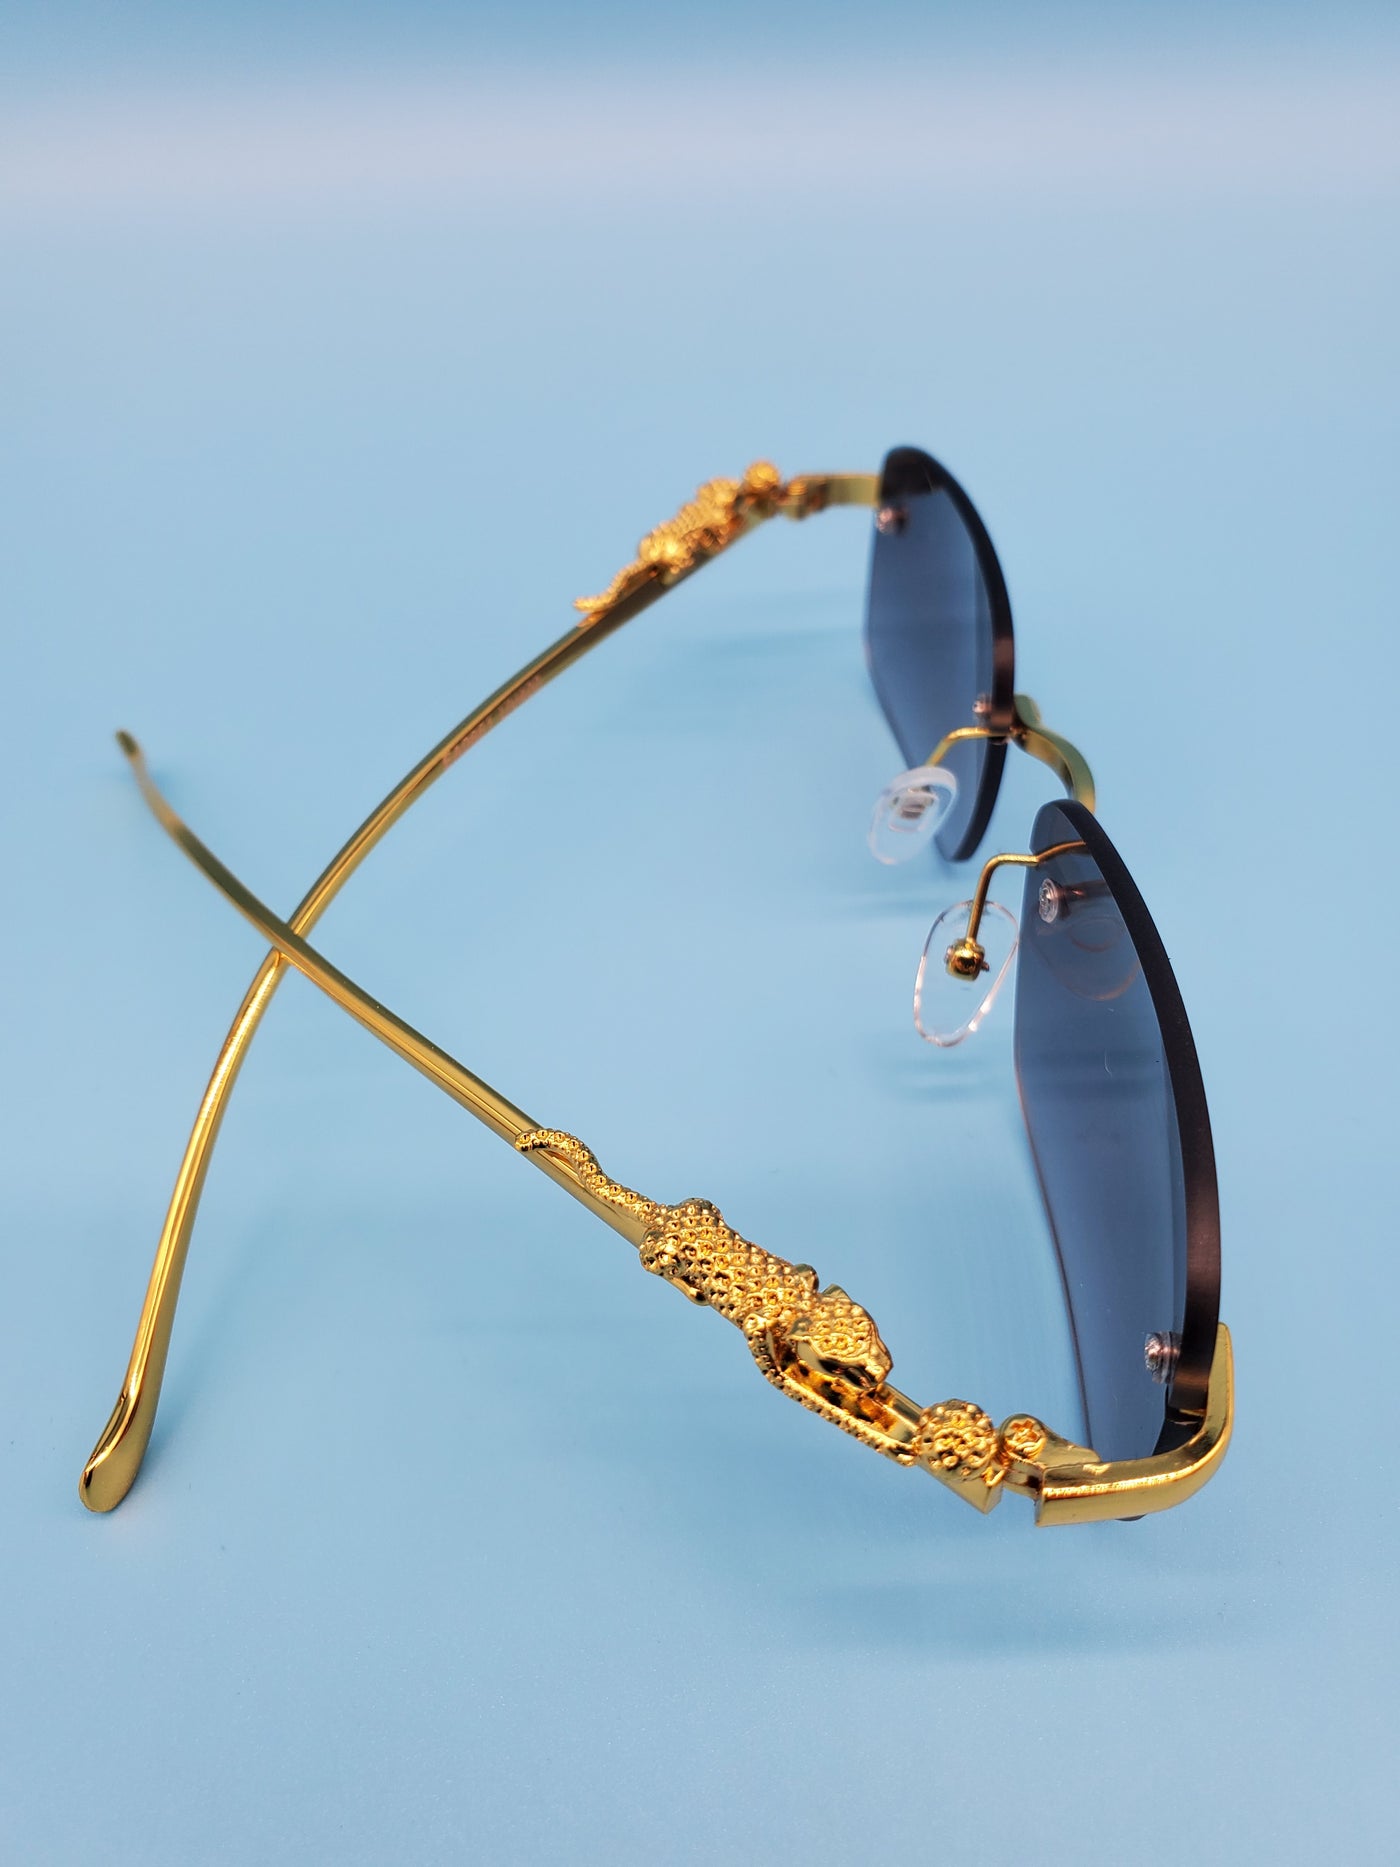 Classic Rimless Luxury Sunglasses